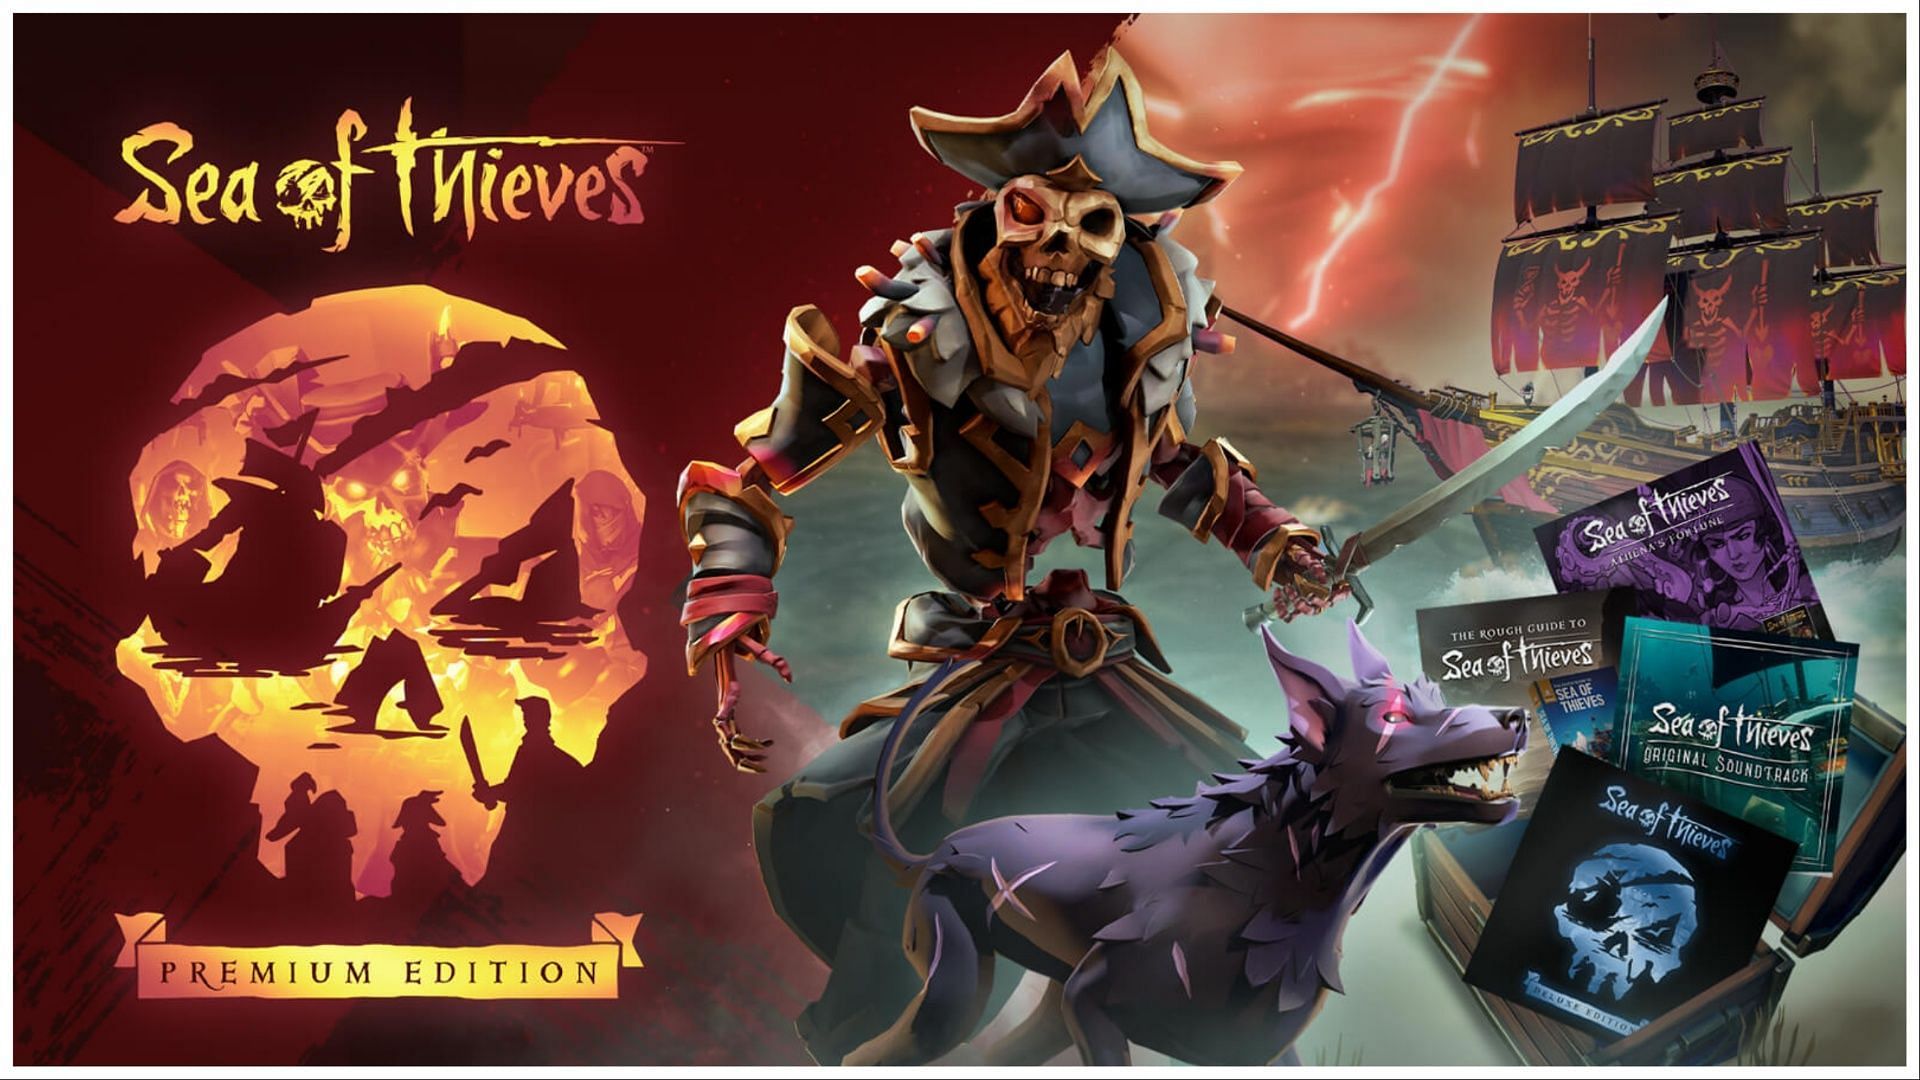 Sea of Thieves Premium Edition cover.